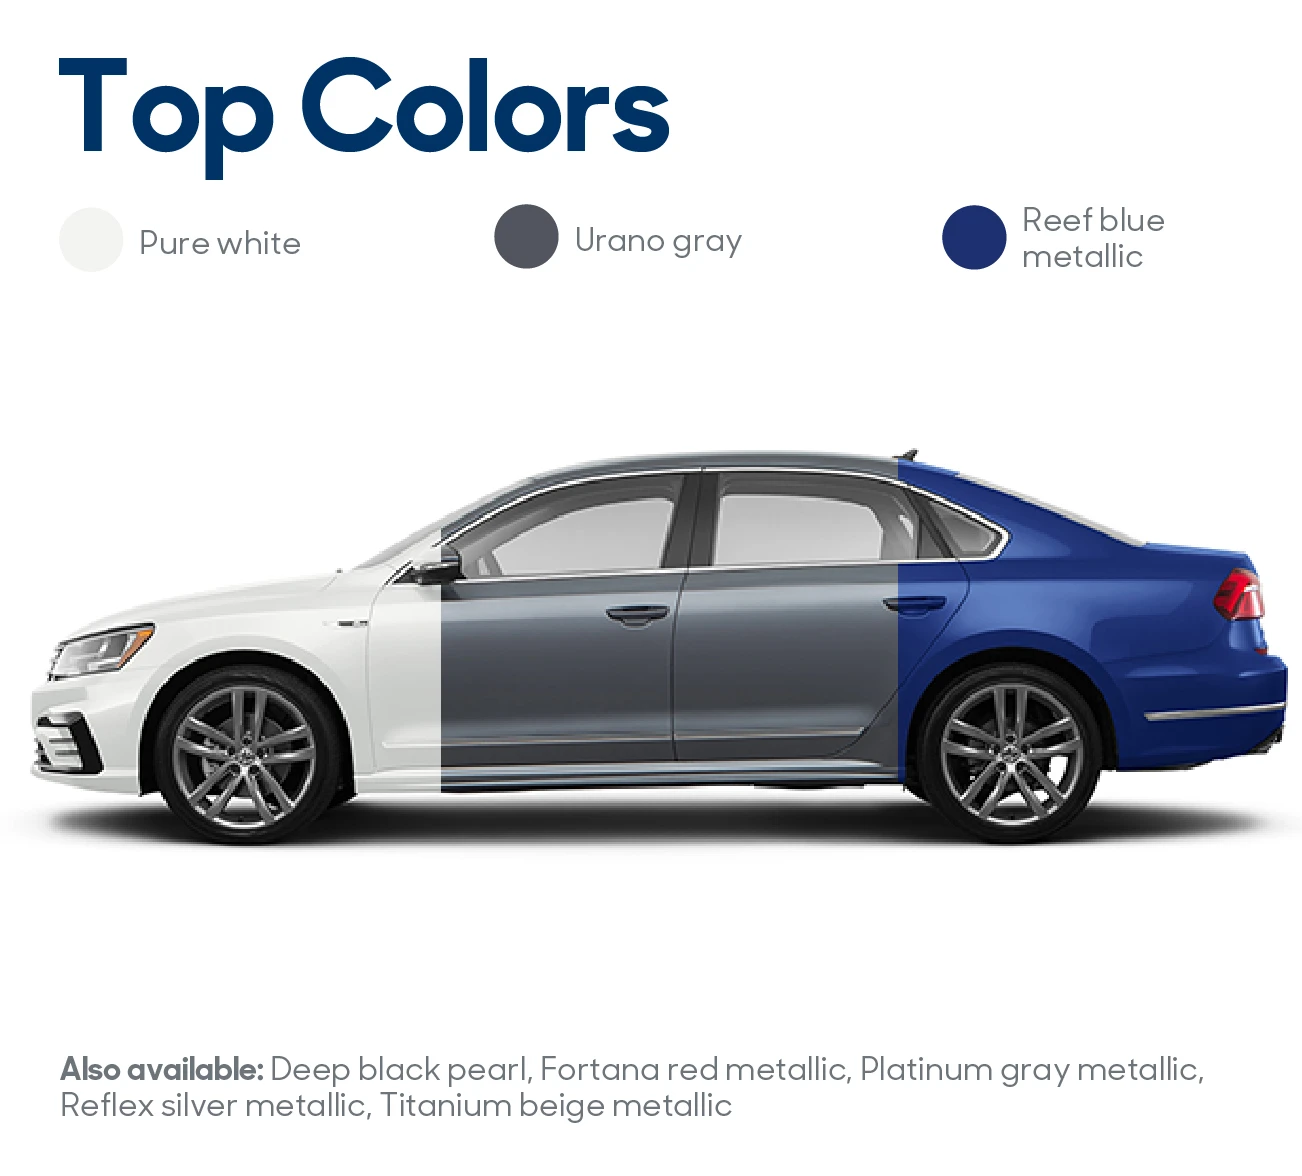 2017 Volkswagen Passat Review: Top Colors | CarMax